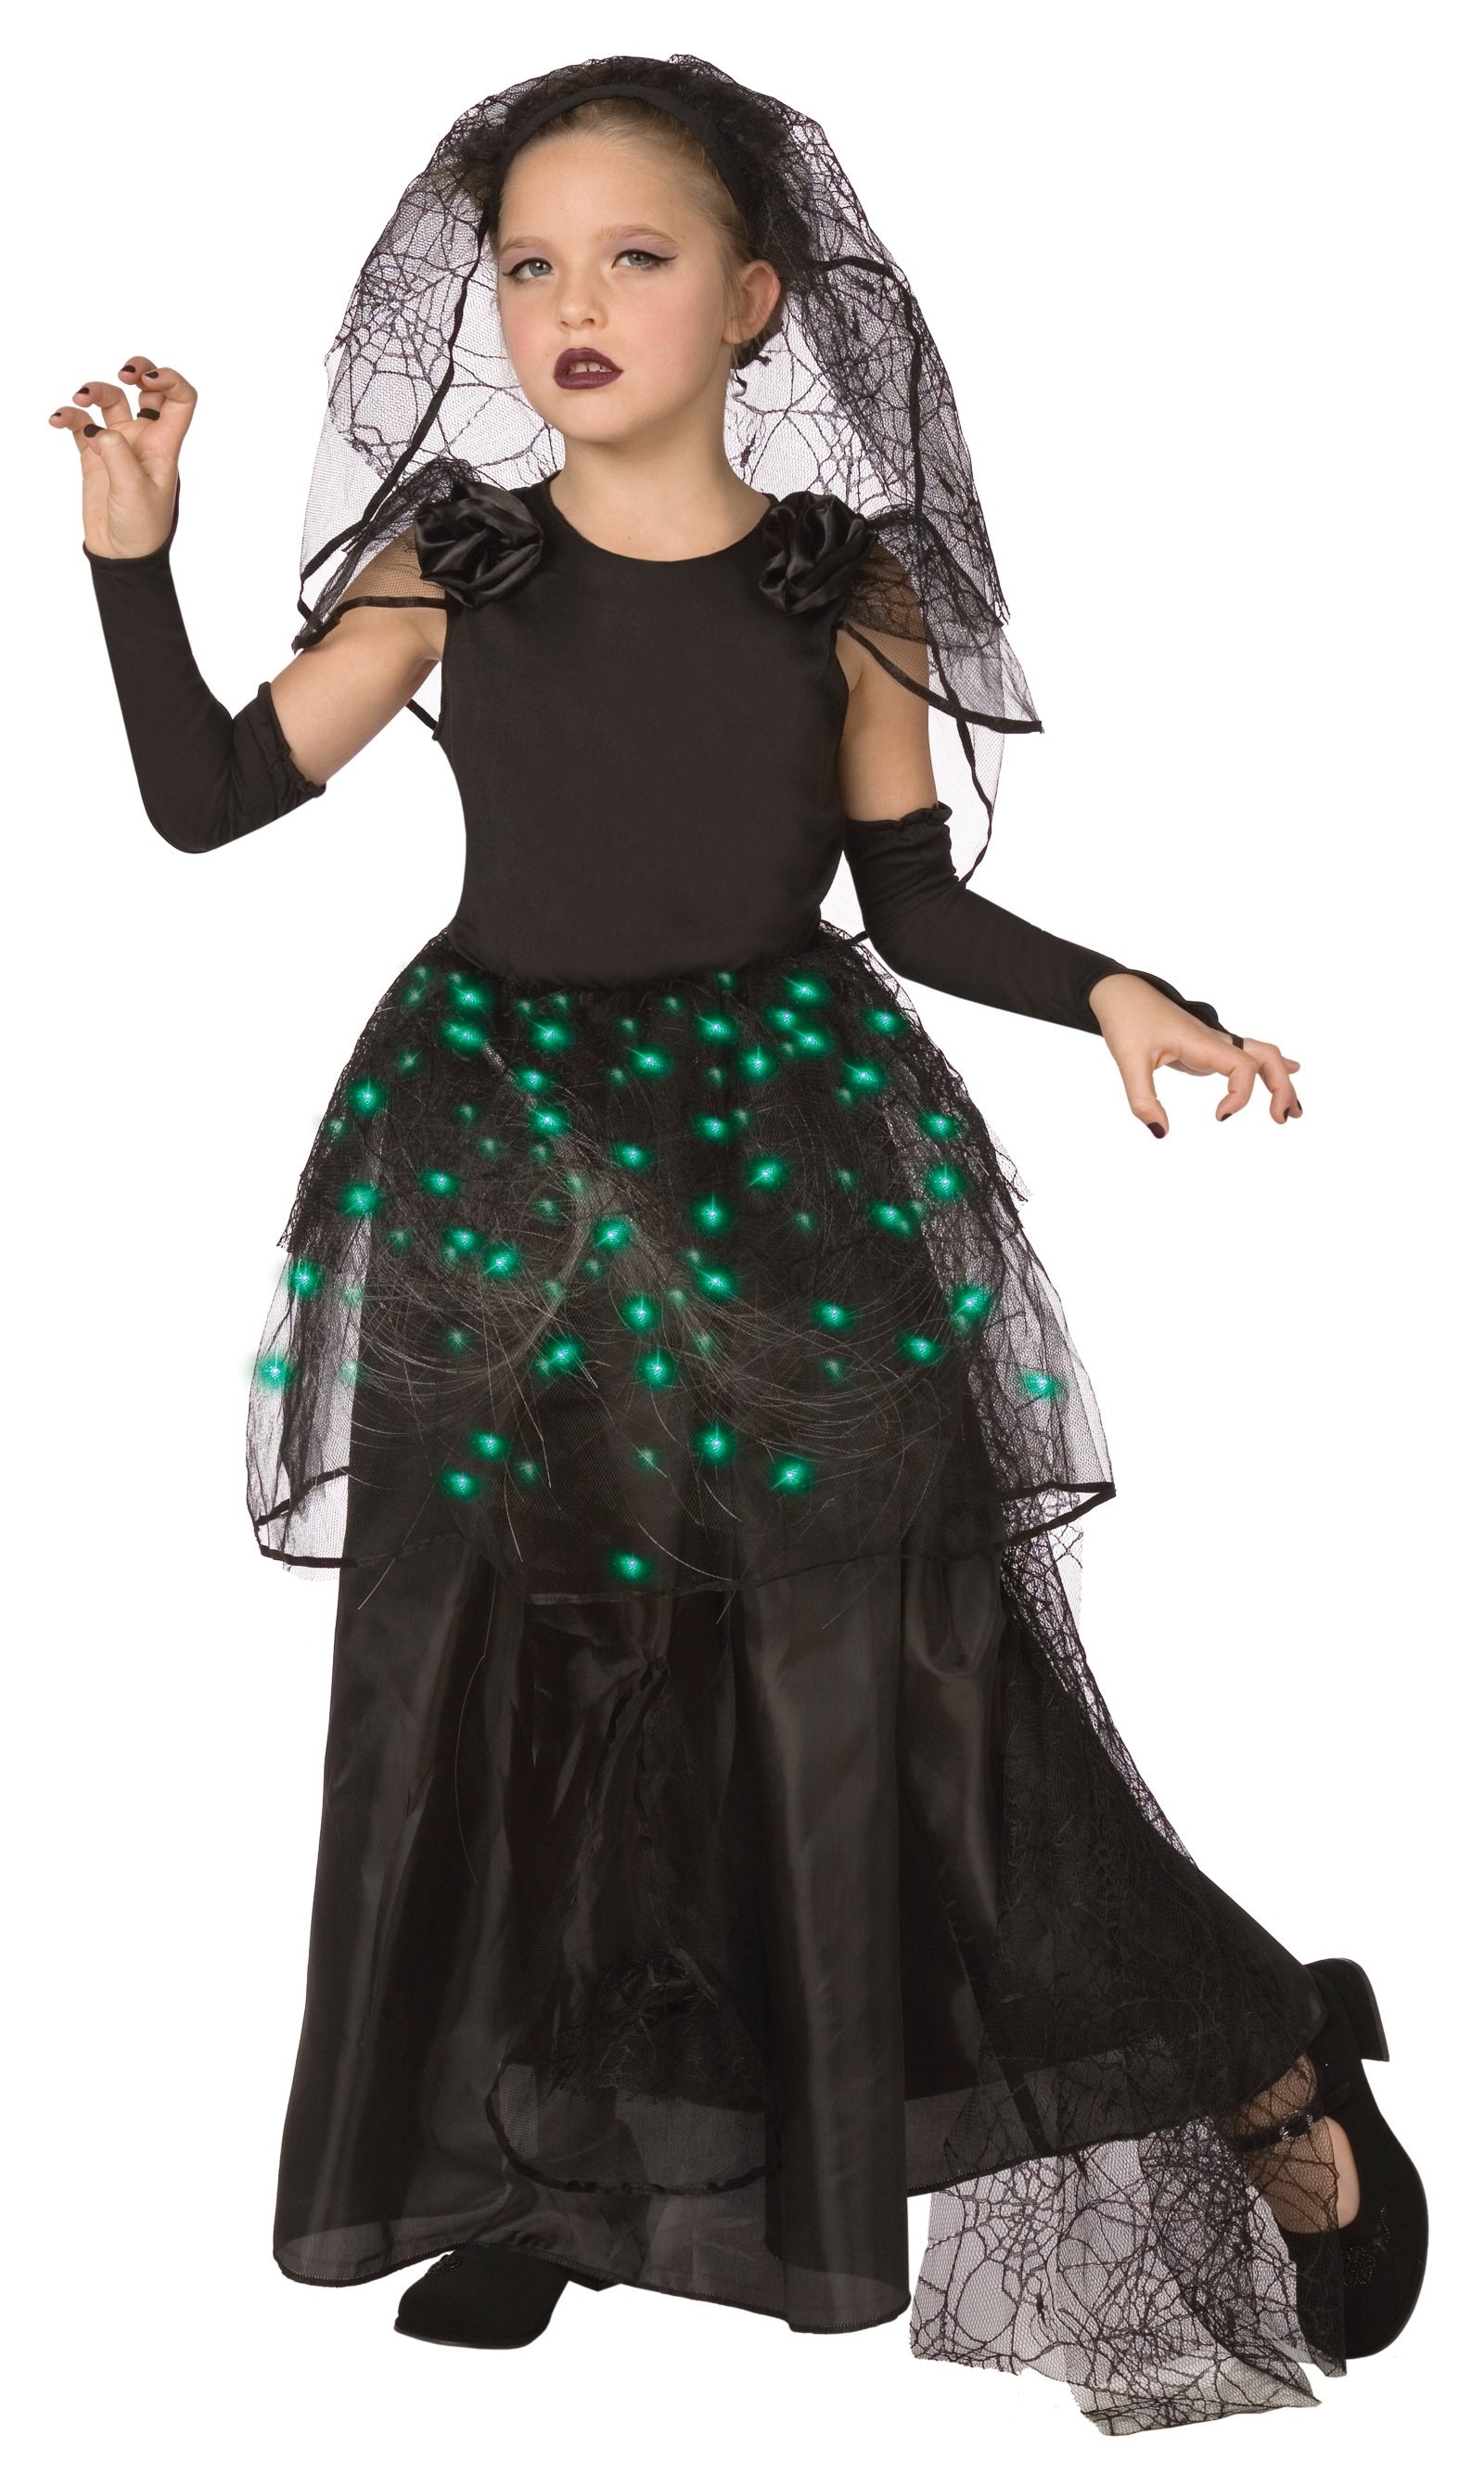 Gothic Bride Light-Up Tween Costume